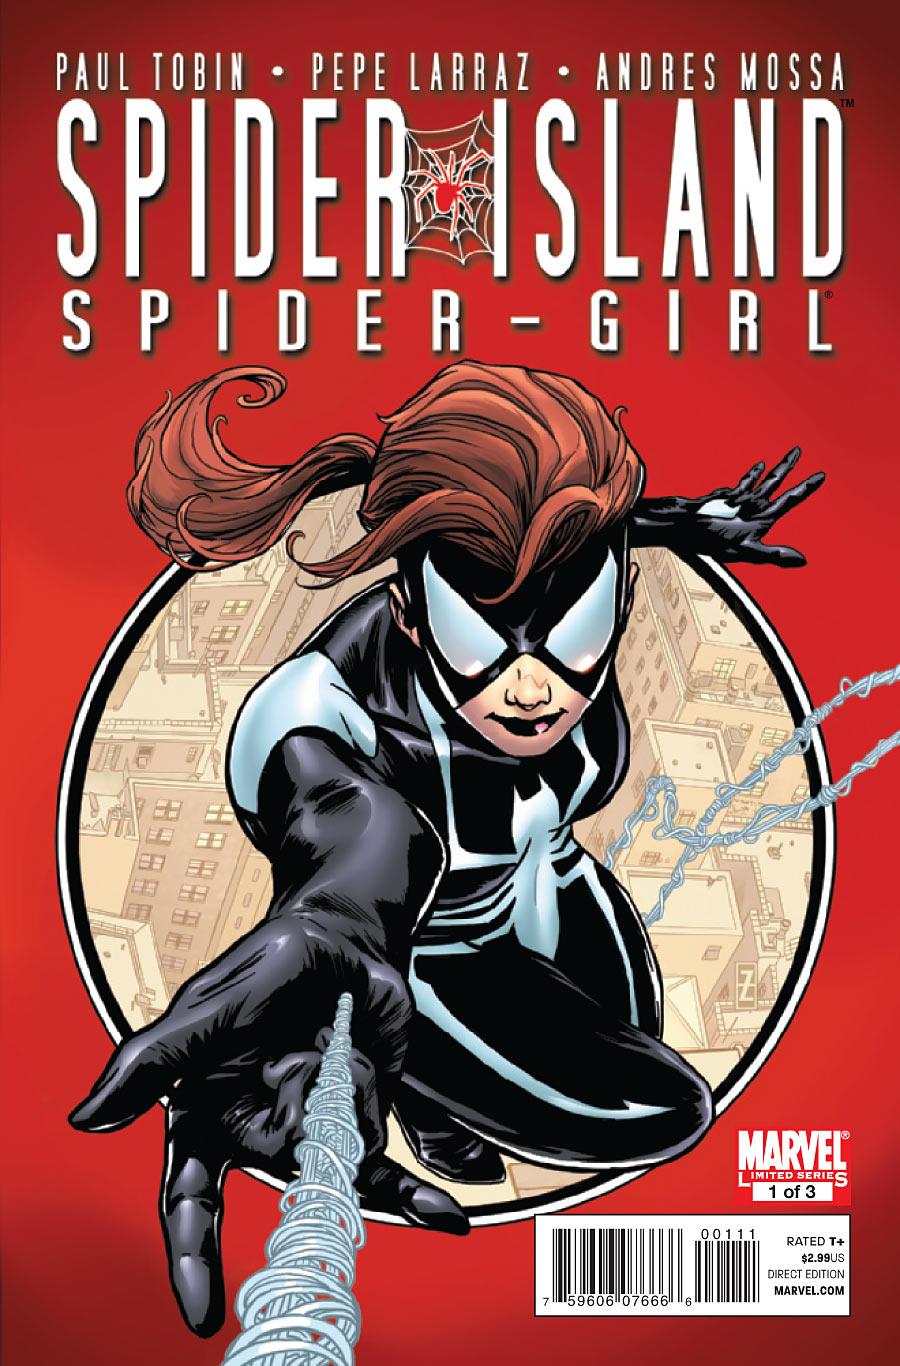 Spider-Island: The Amazing Spider-Girl Vol. 1 #1